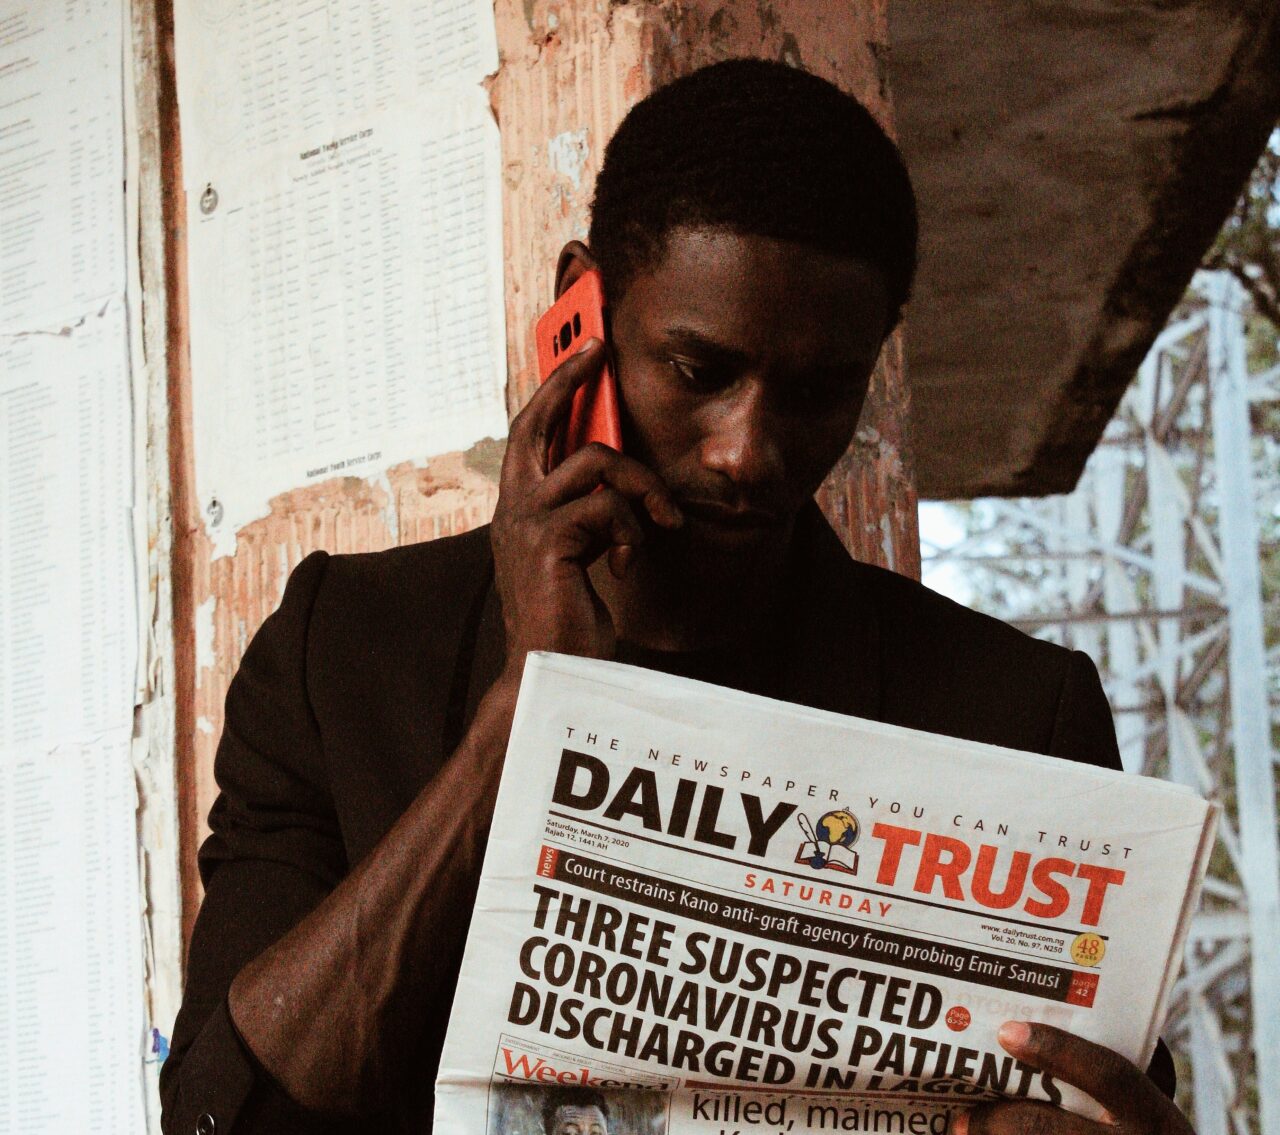 Black man speaking on phone while reading newspaper